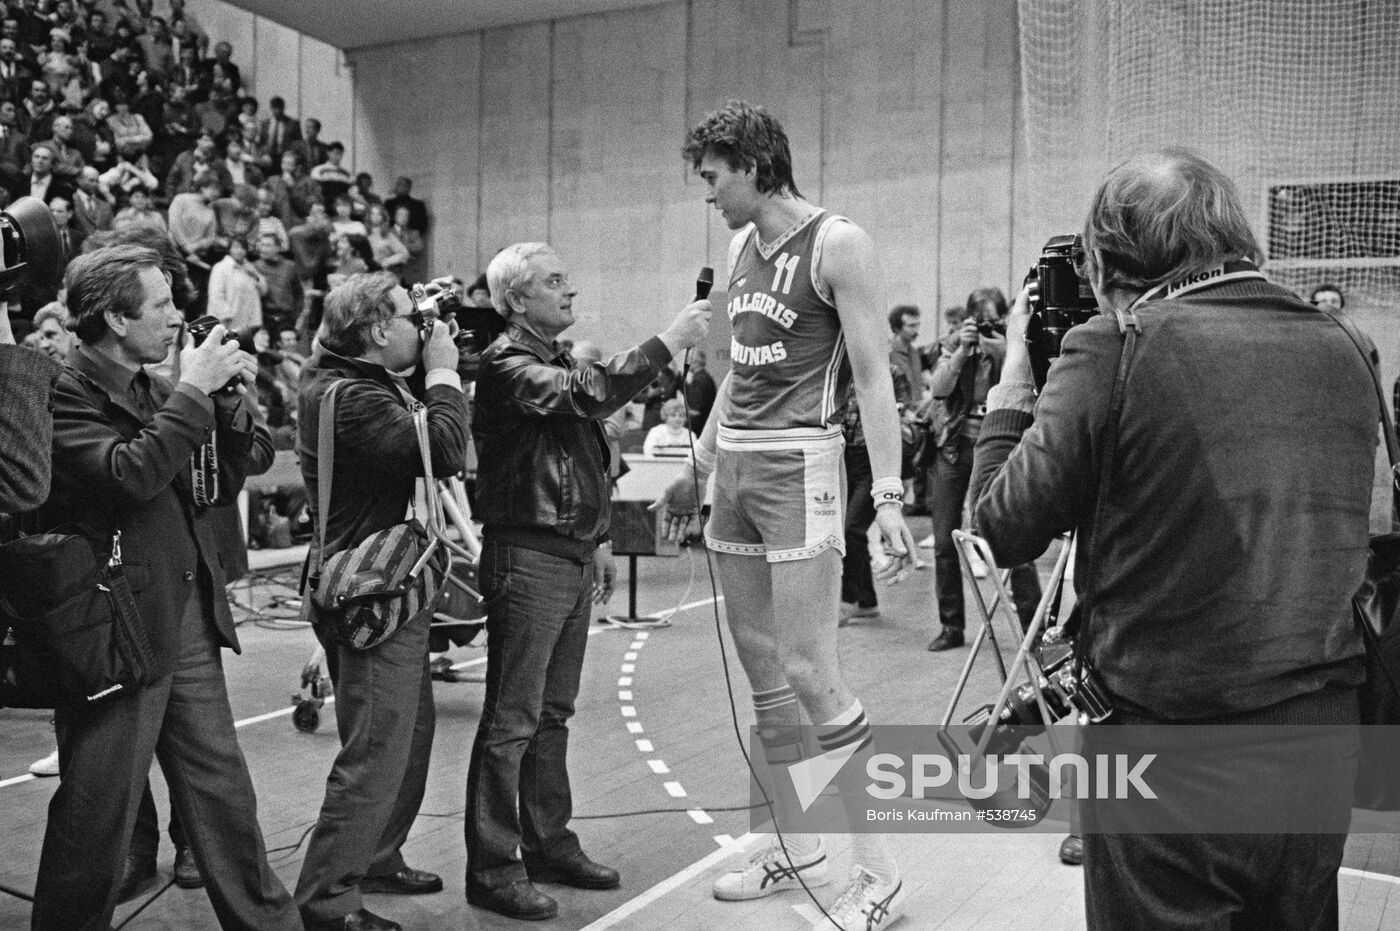 Soviet Lithuanian basketball player Arvydas Sabonis